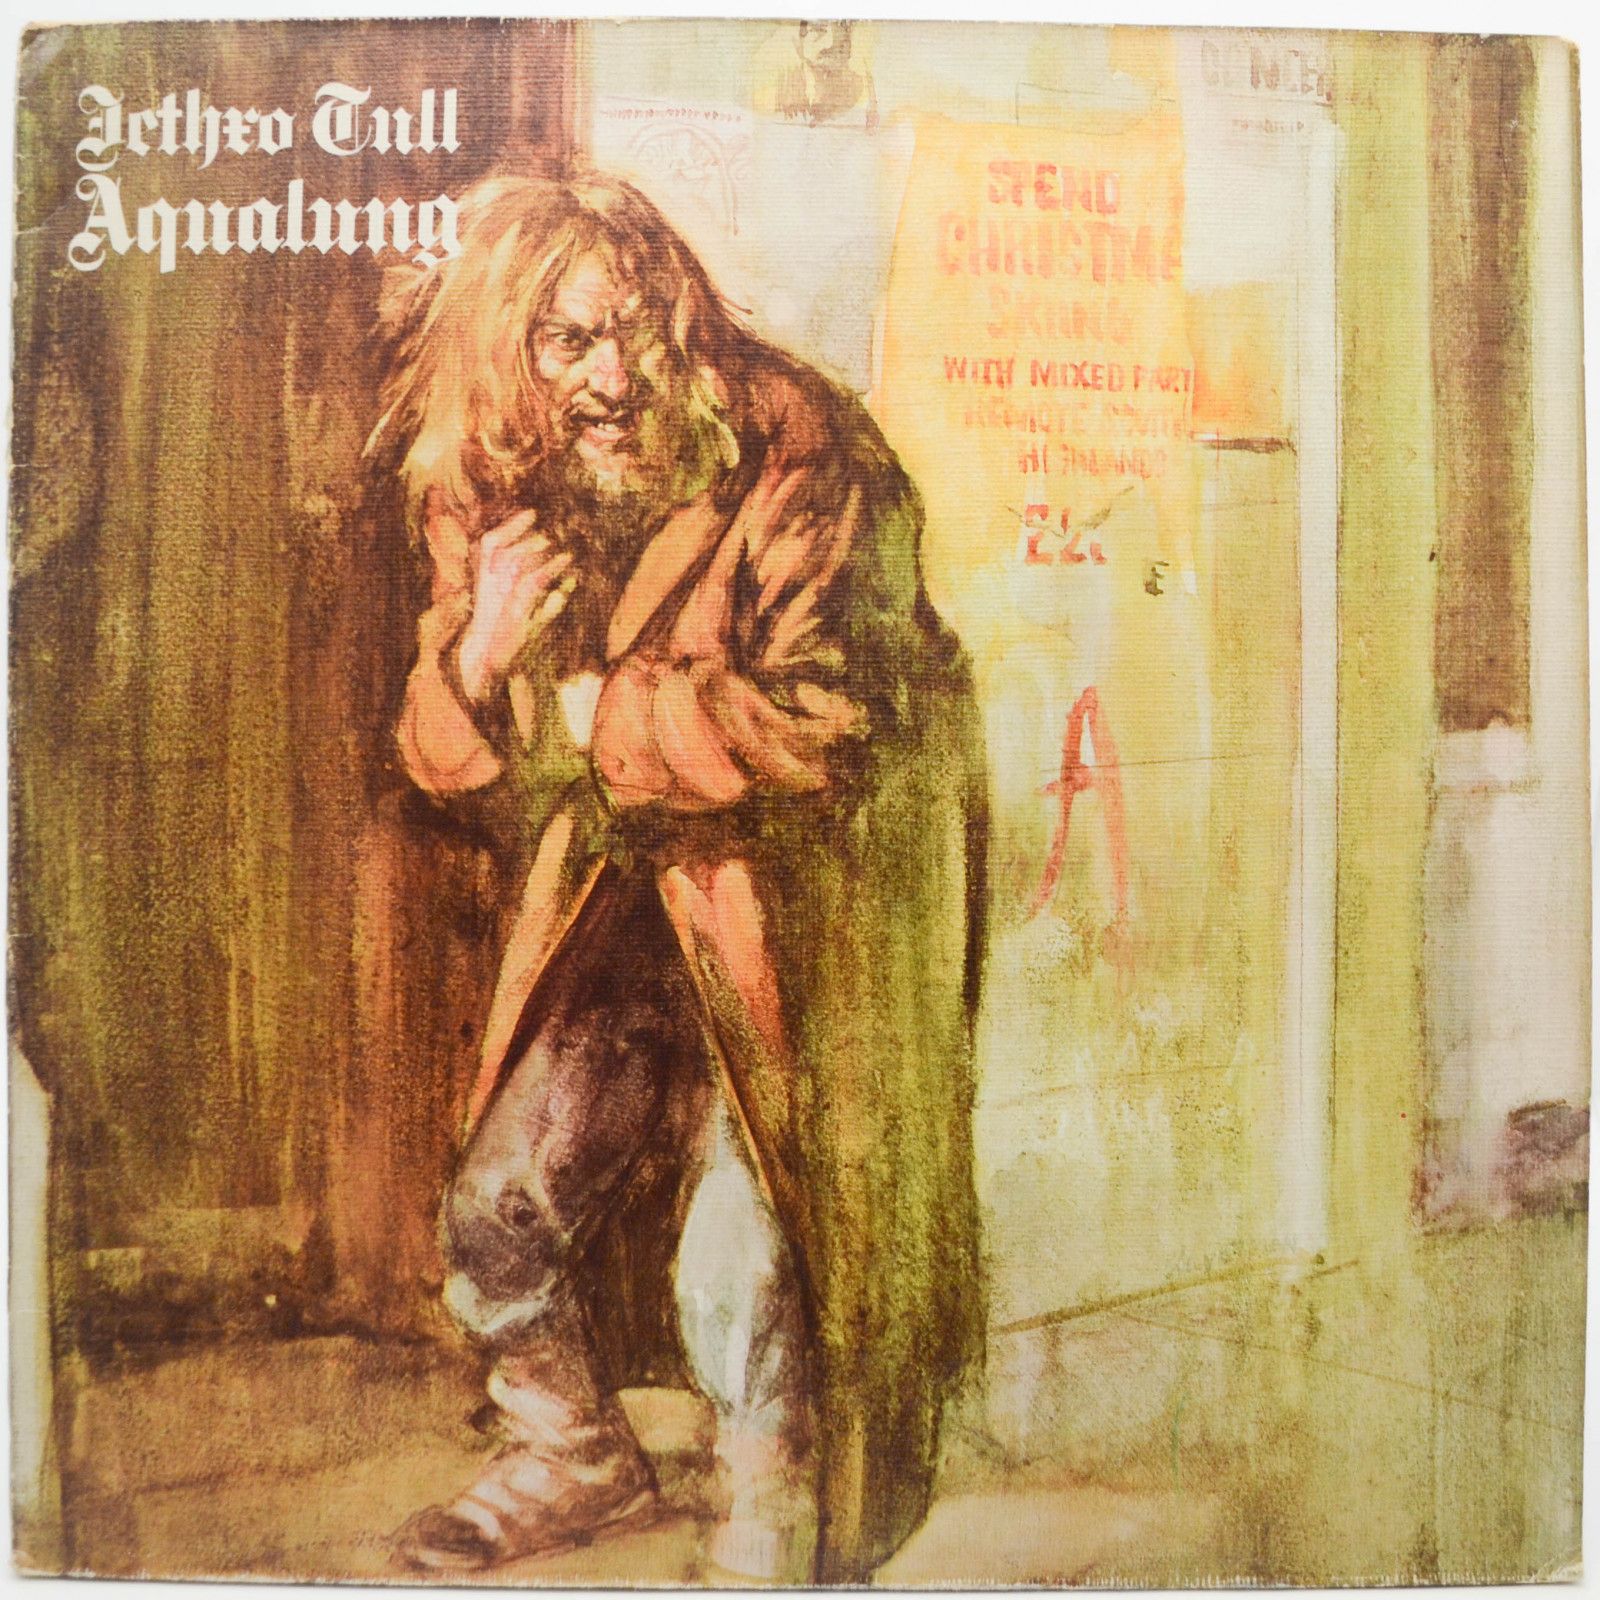 Jethro Tull — Aqualung, 1971